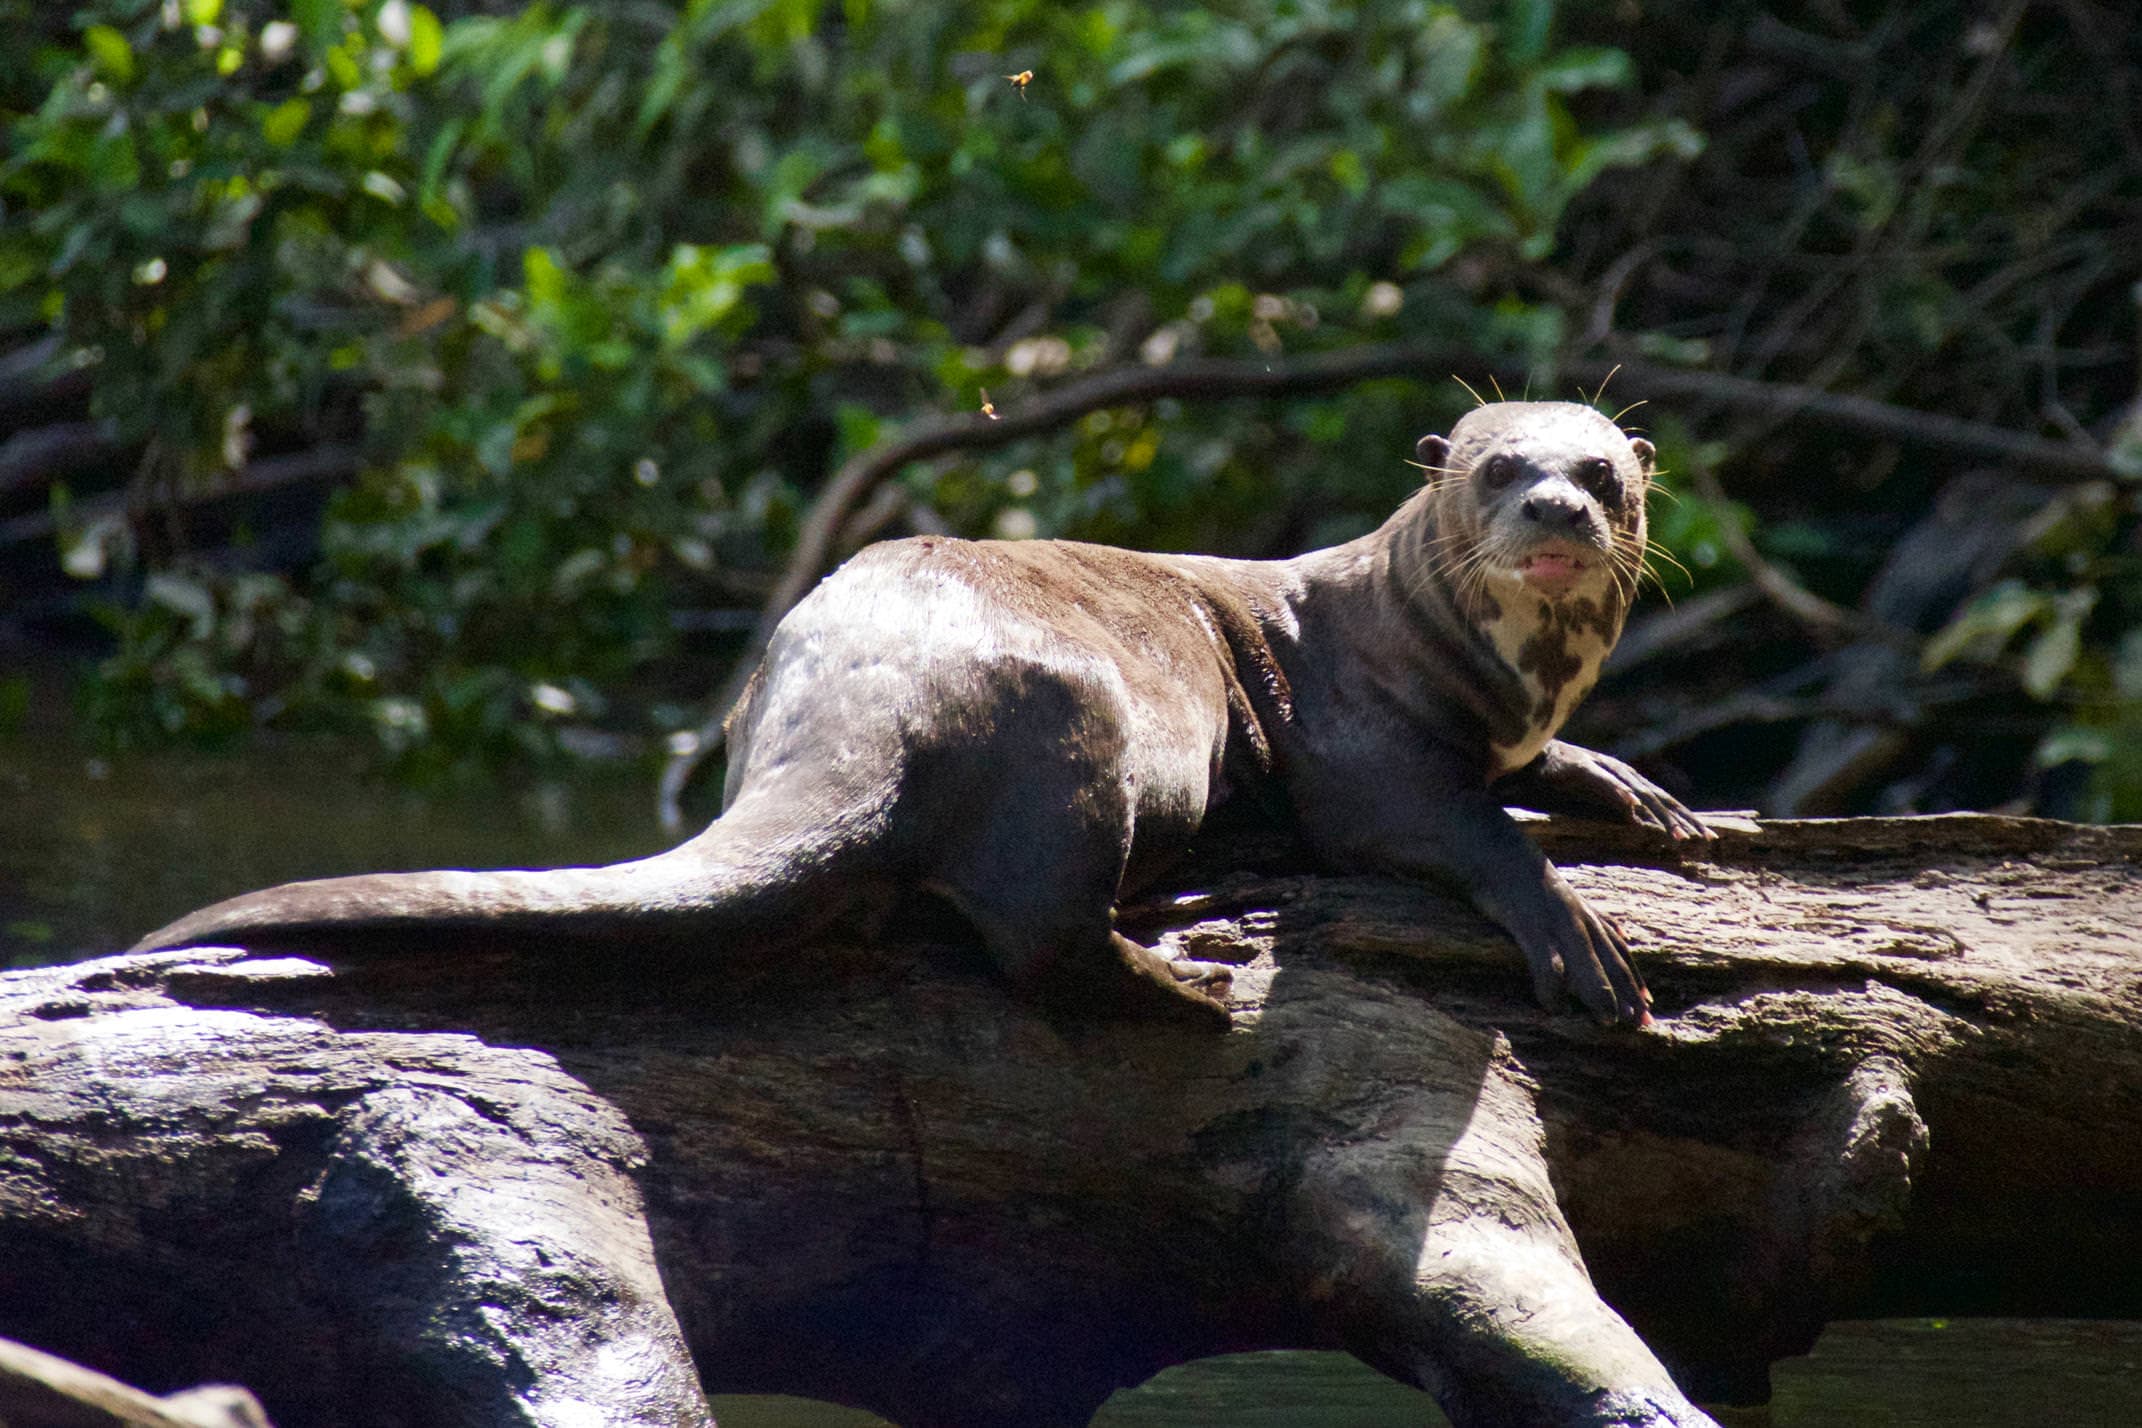 Brazil amazon cristalino lodge giant river otter copyright thomas power pura aventura